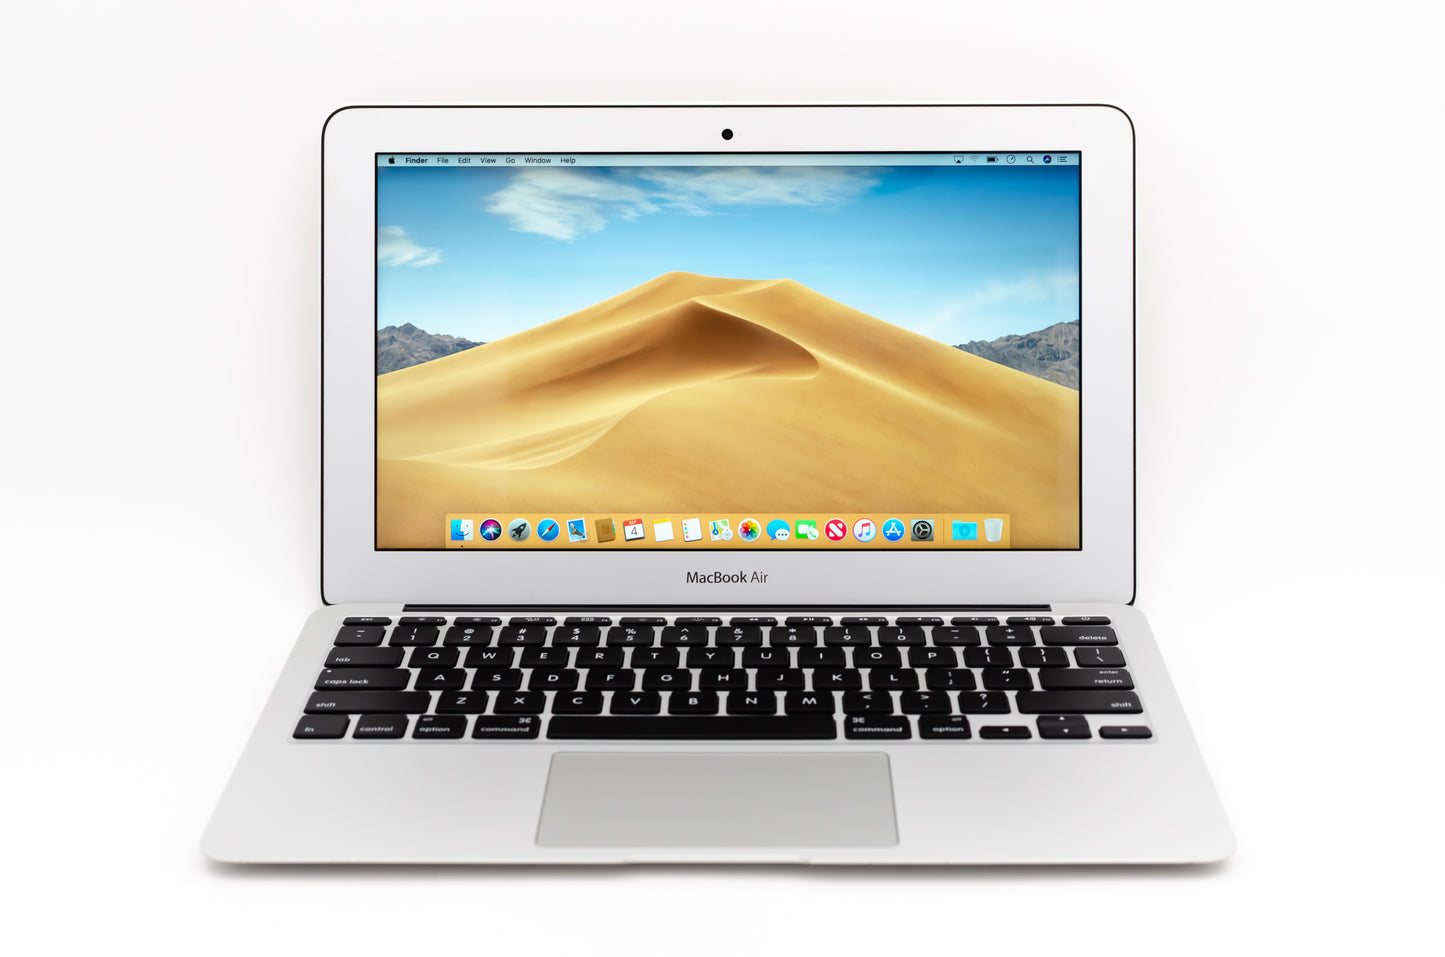 apple-mid-2012-11.6-inch-macbook-air-a1465-aluminum-dci7 - 2ghz processor, 8gb ram, hd 4000 - 512mb gpu-md845ll/a-1